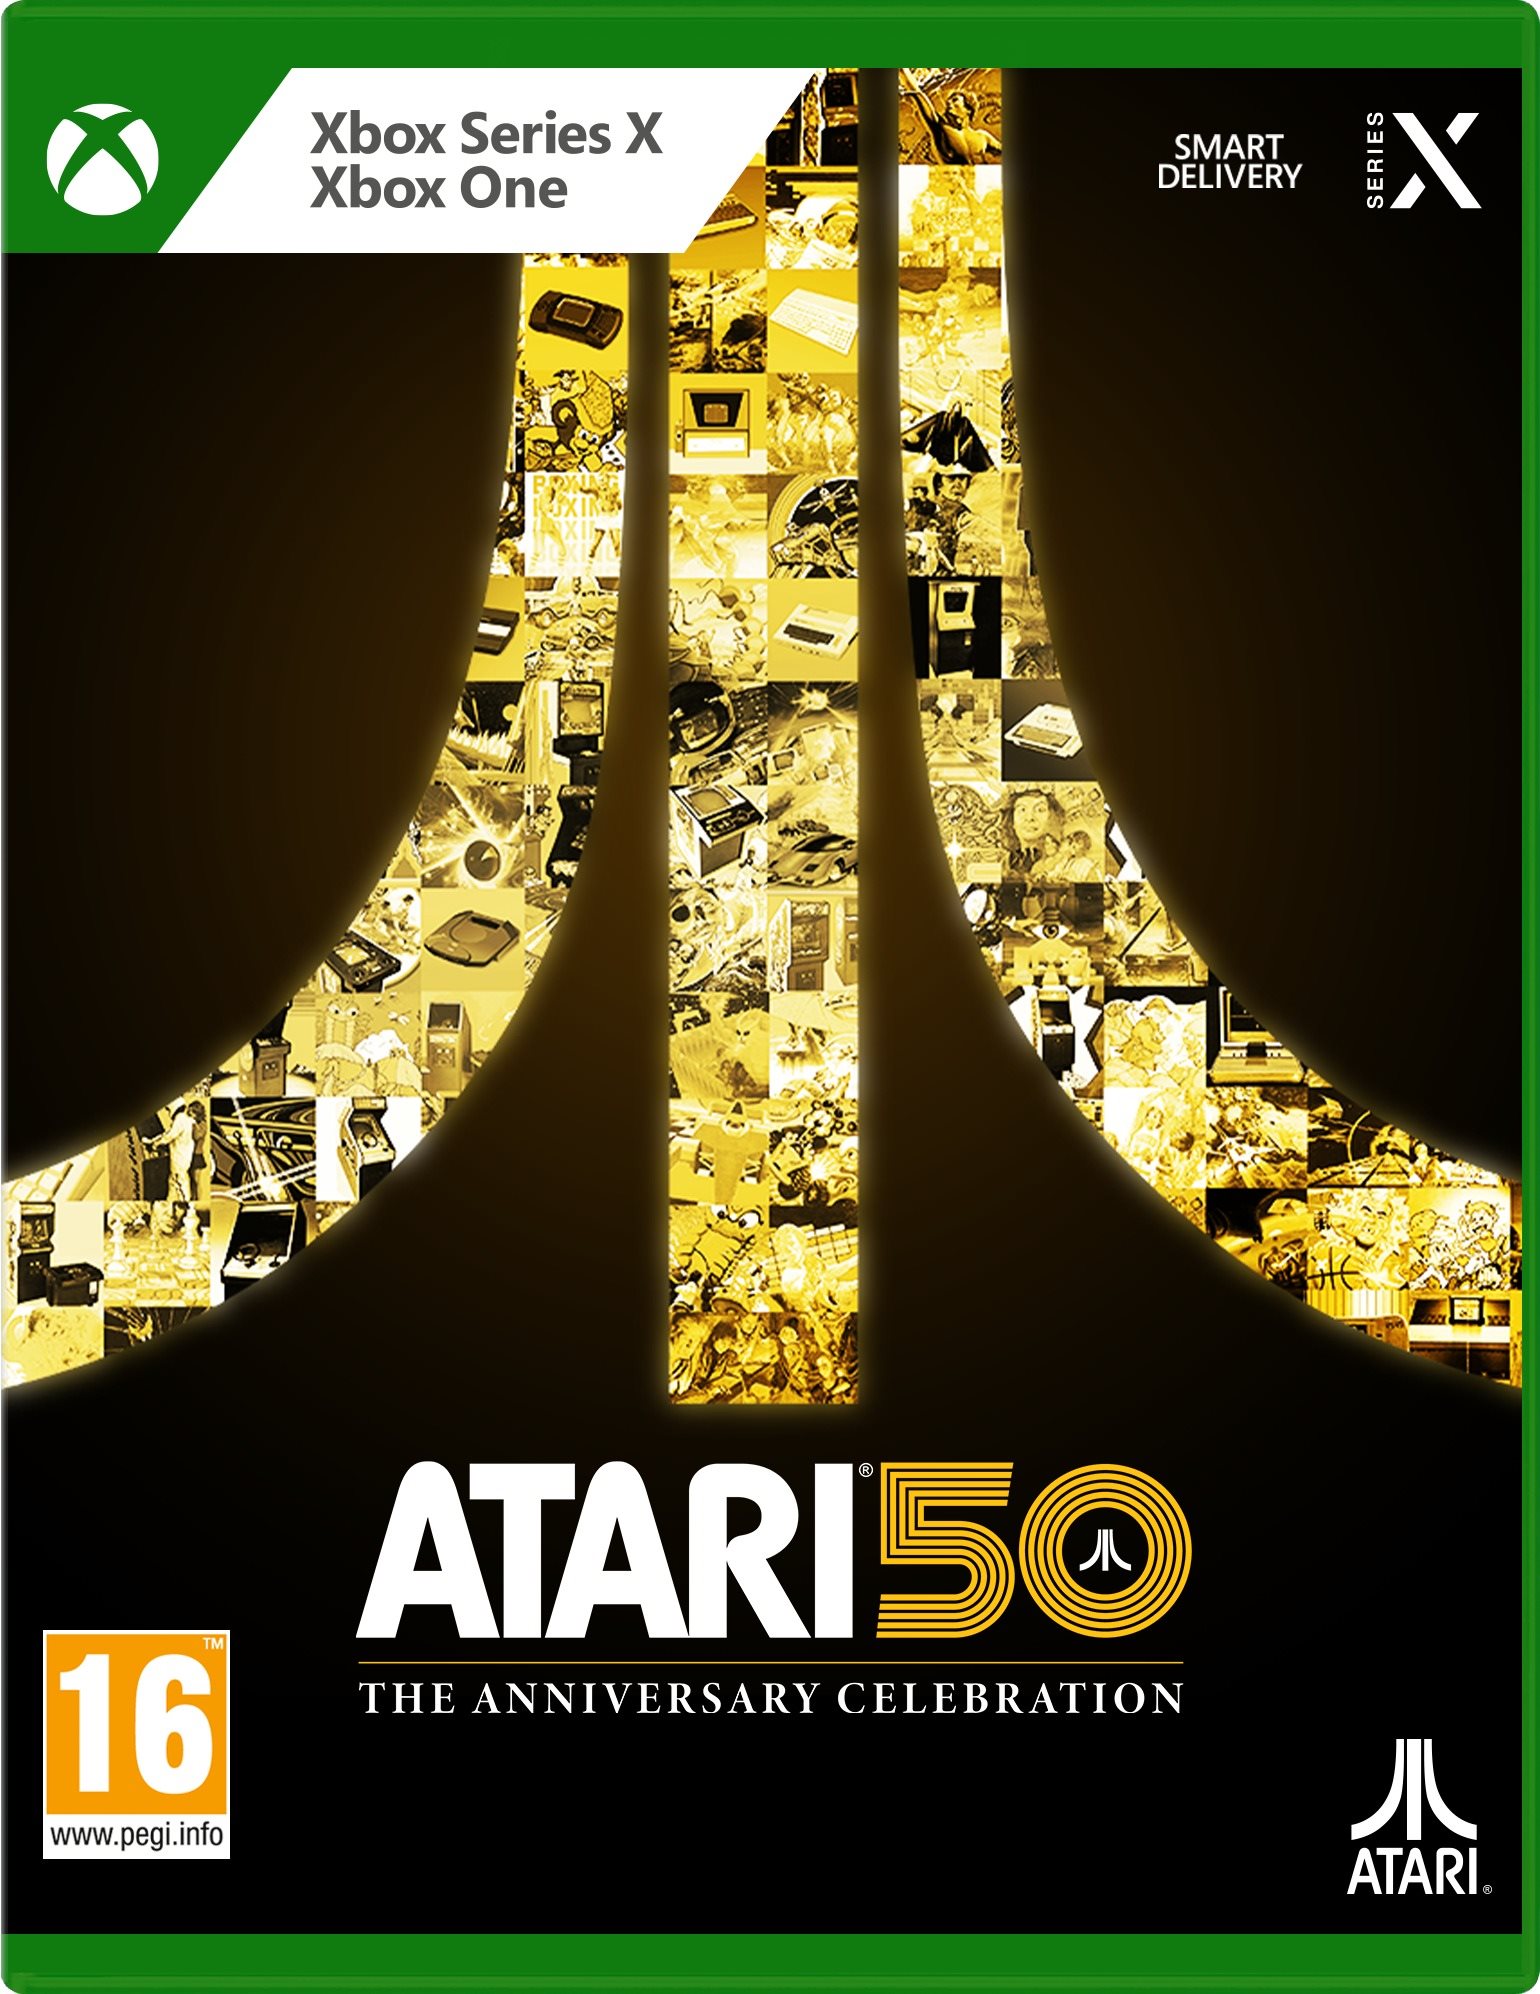 Atari 50: The Anniversary Celebration - Xbox Series